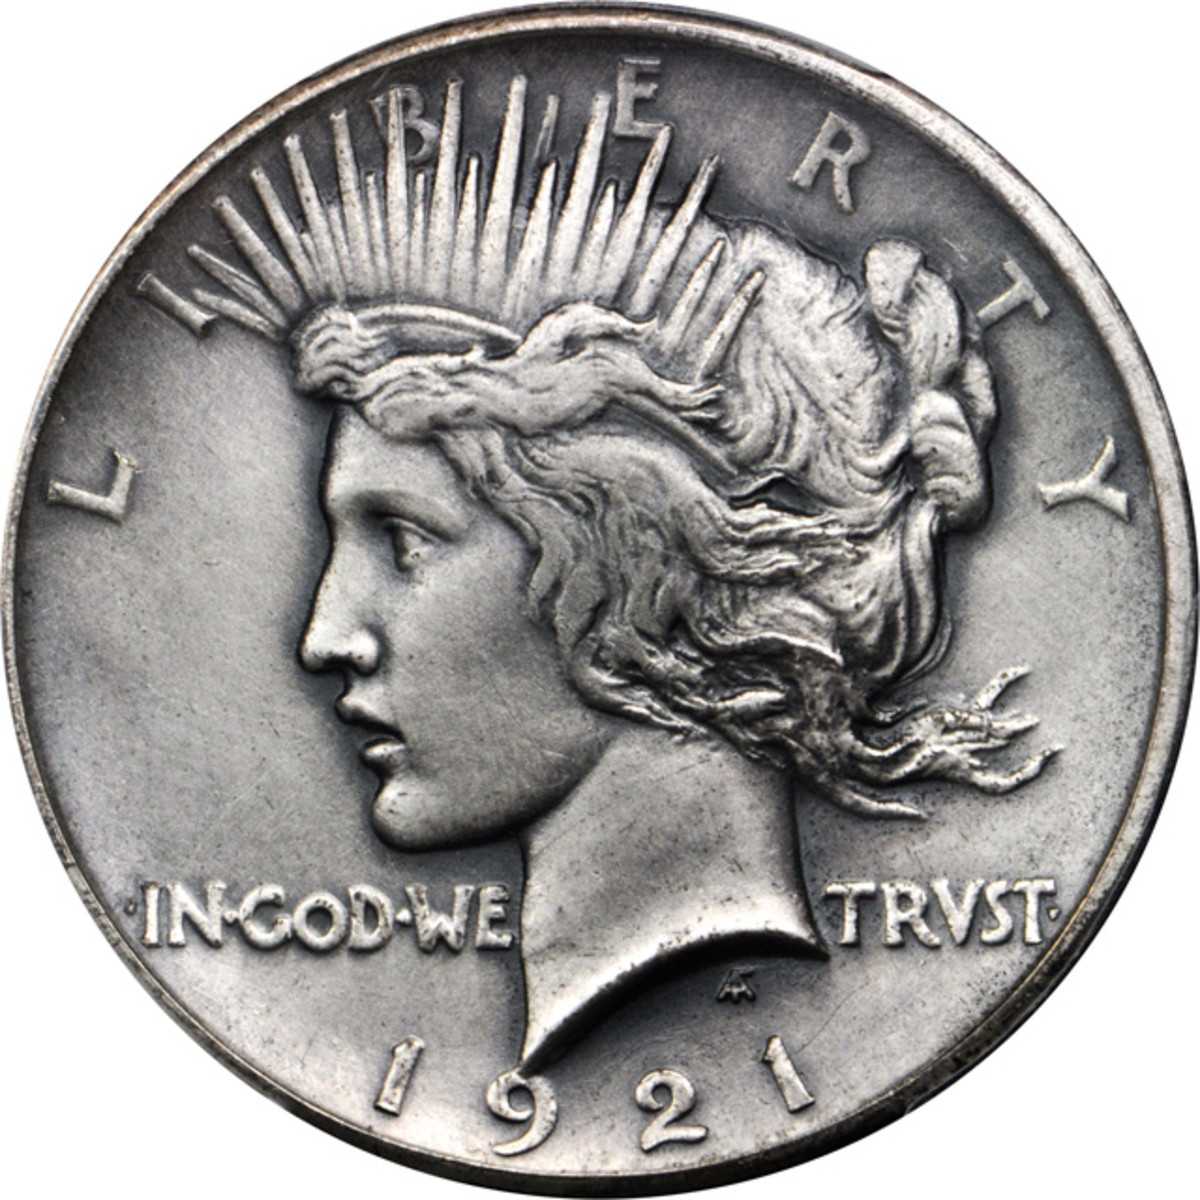 Lot 13166. 1921 Peace silver dollar. High Relief. Sandblast or Matte Finish, Antiqued. PCGS Specimen-64. Ex: Raymond T. Baker Estate.